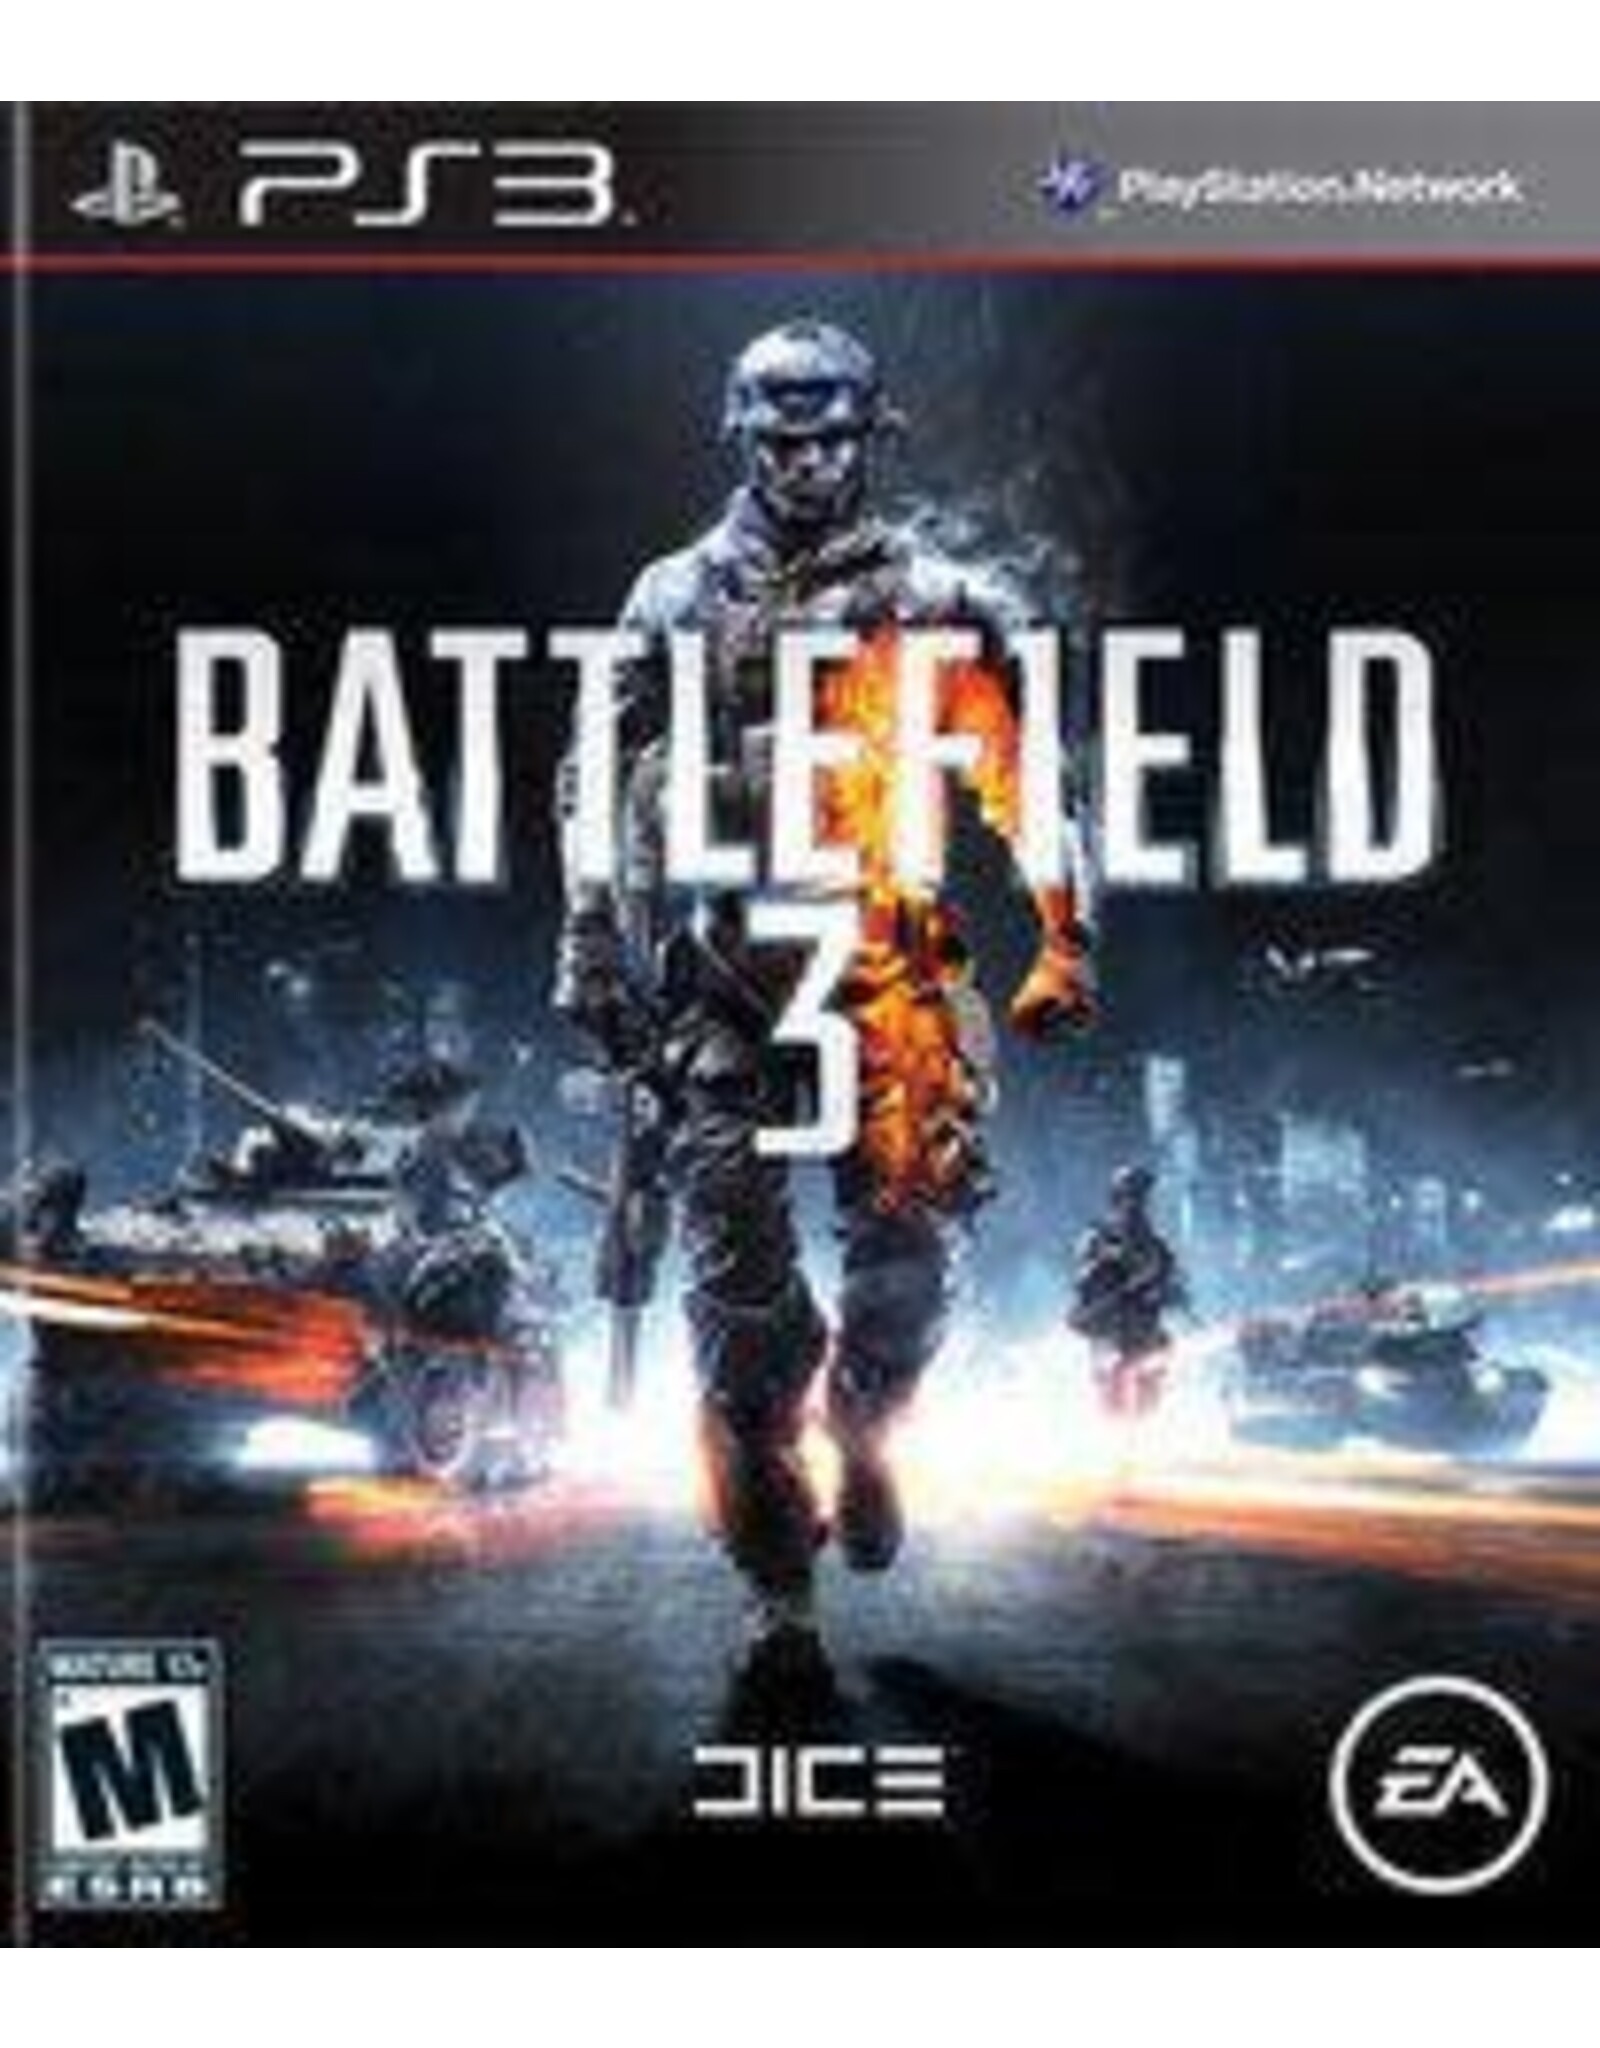 Playstation 3 Battlefield 3 (No Manual)